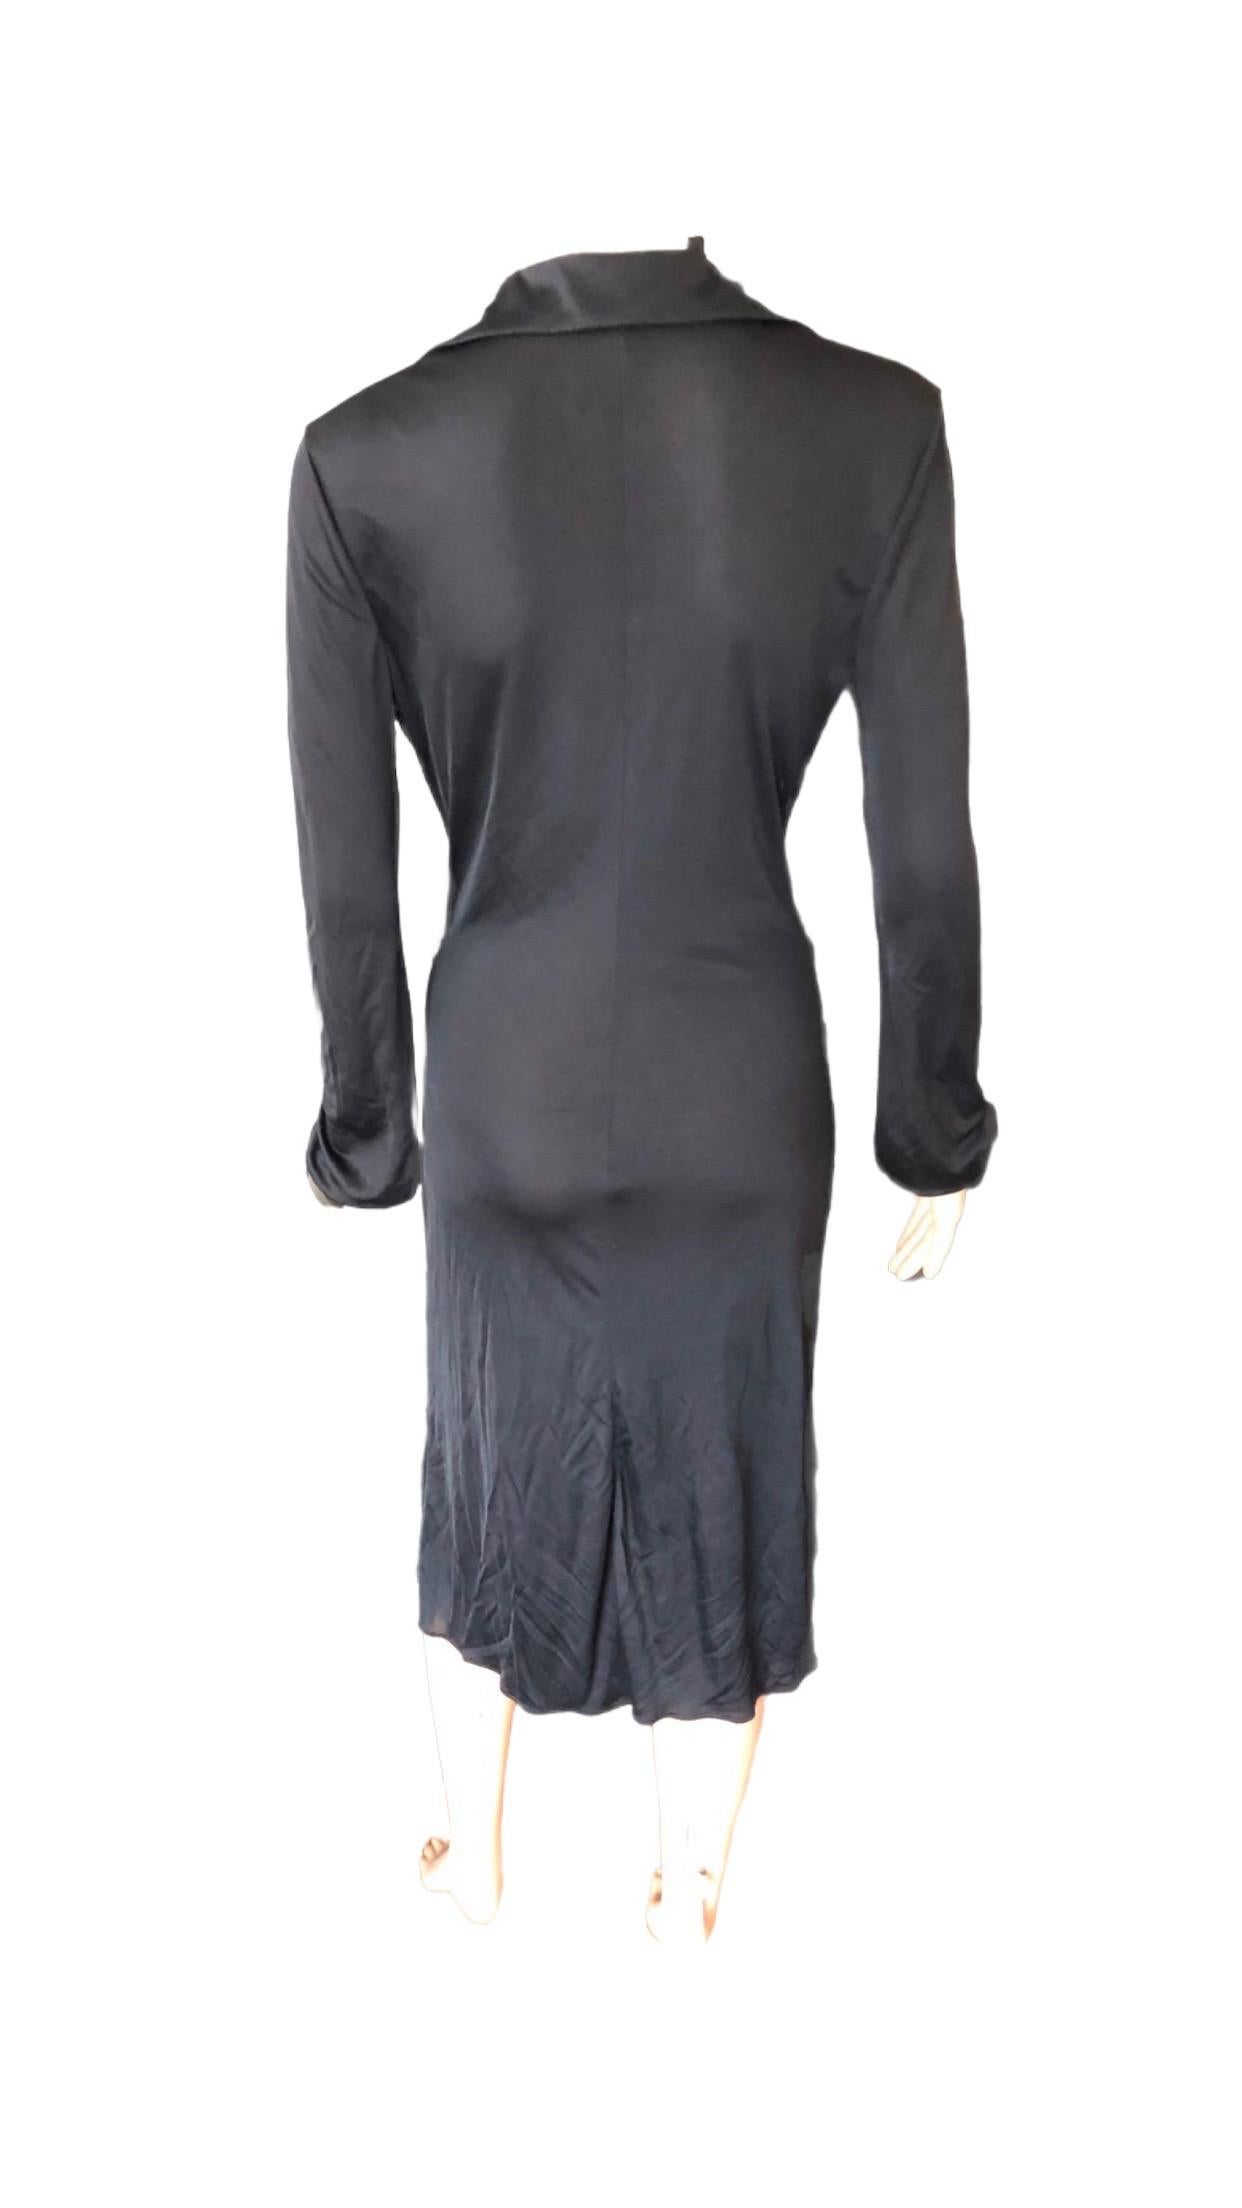 Gianni Versace S/S 2000 Runway Vintage Plunging Neckline Black Dress  For Sale 7